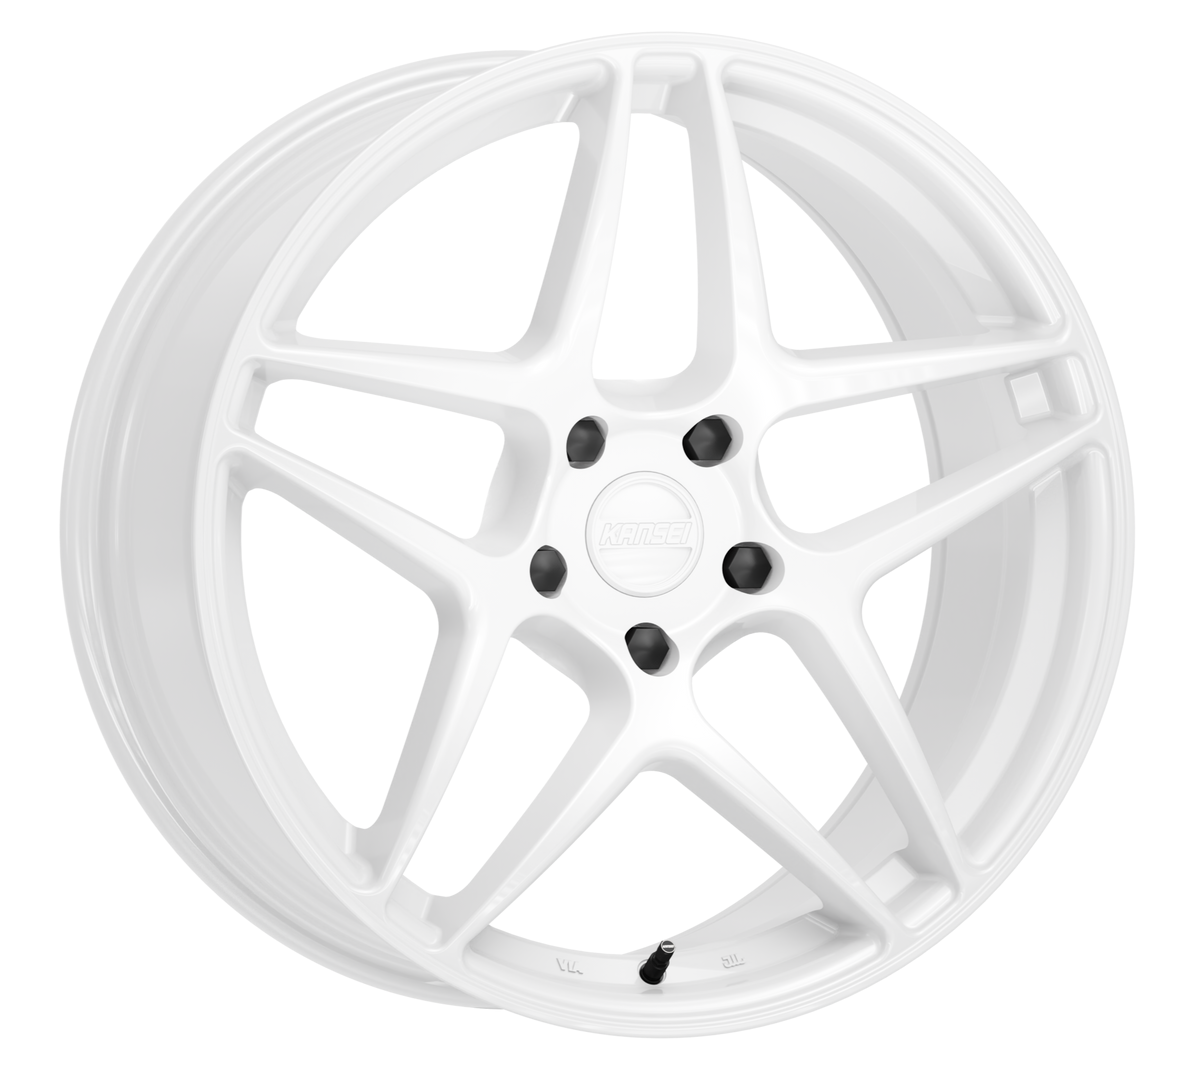 K15W ASTRO Wheel, Size: 18" x 10.50", Bolt Pattern: 5 x 114.300 mm, Backspace: 6.22" [Finish: Gloss White]